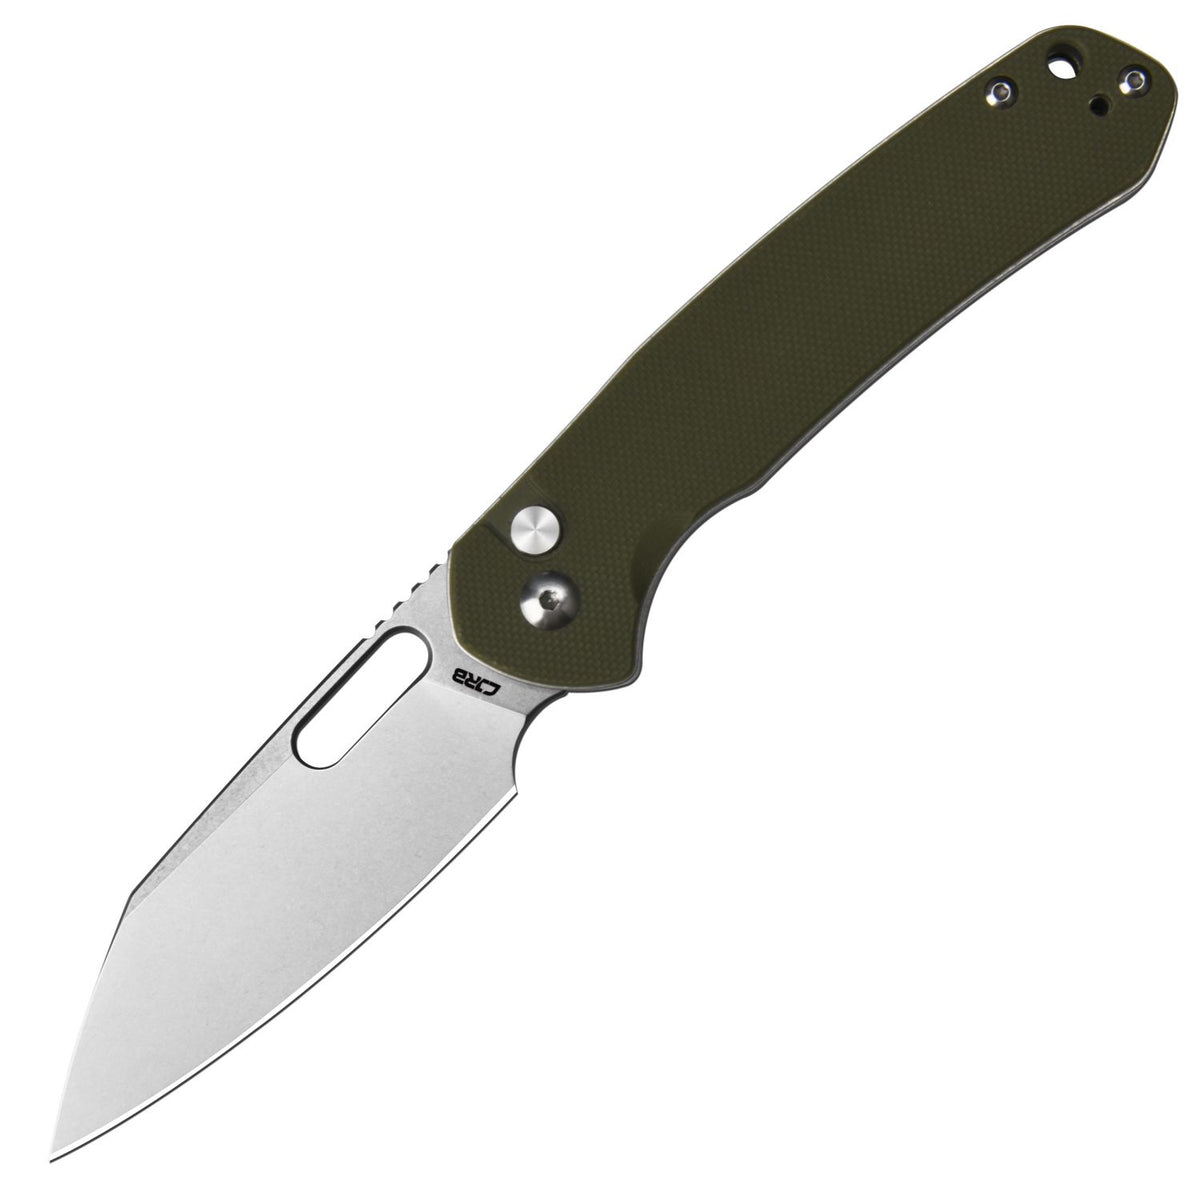 CJRB Pyrite Wharncliffe Folding Knife - AR-RPM9 Blade, G10 Handle